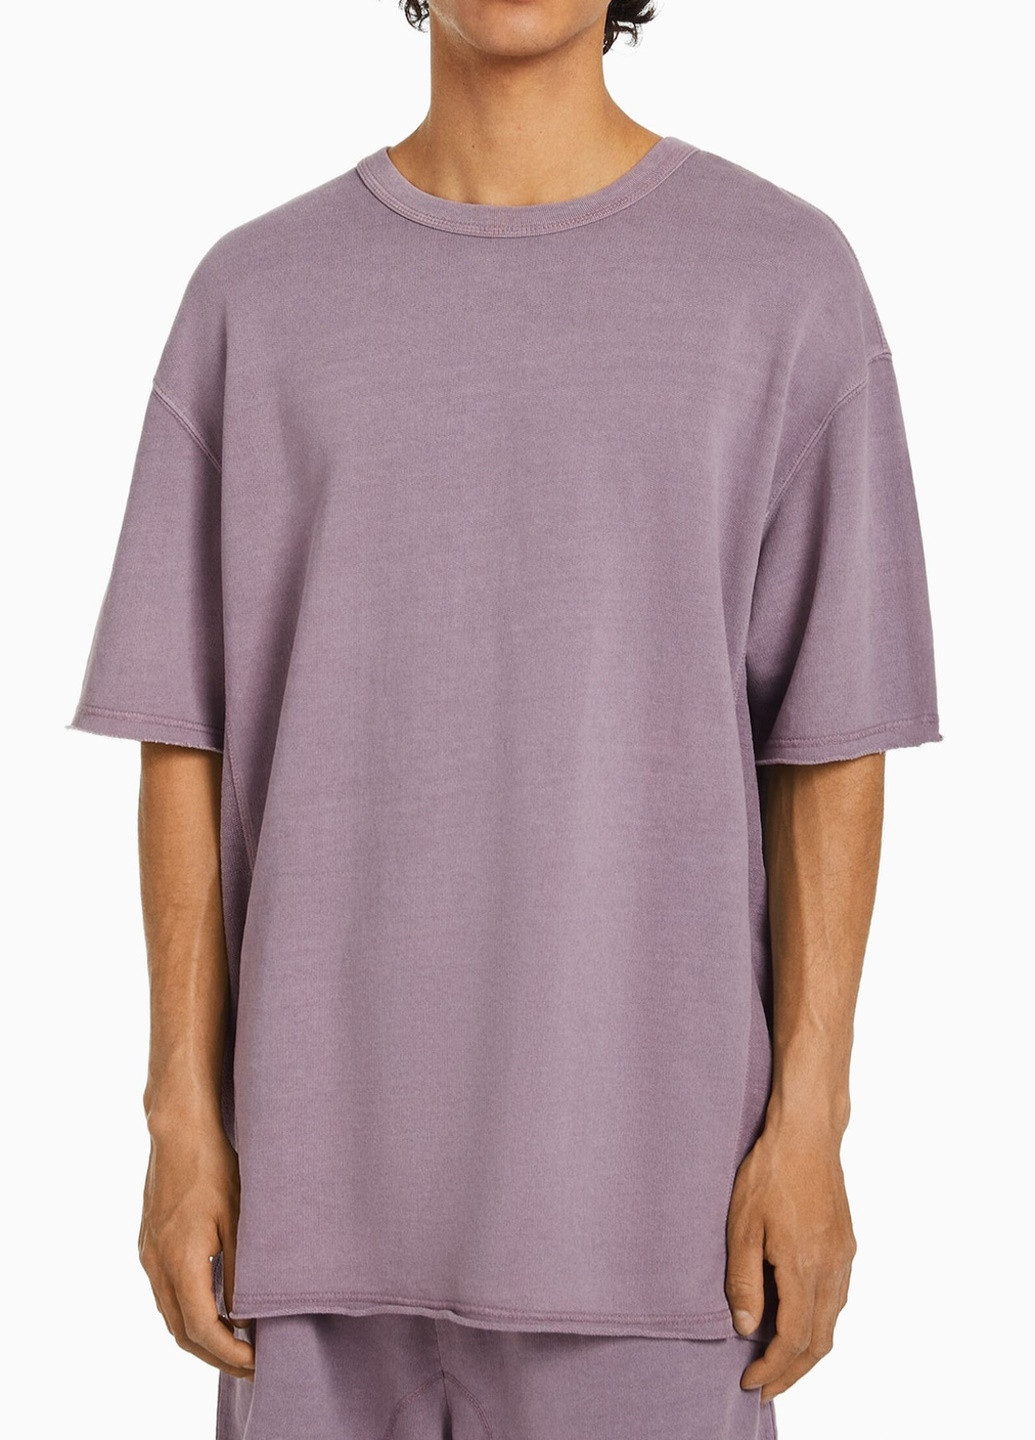 Фиолетовая футболка Bershka